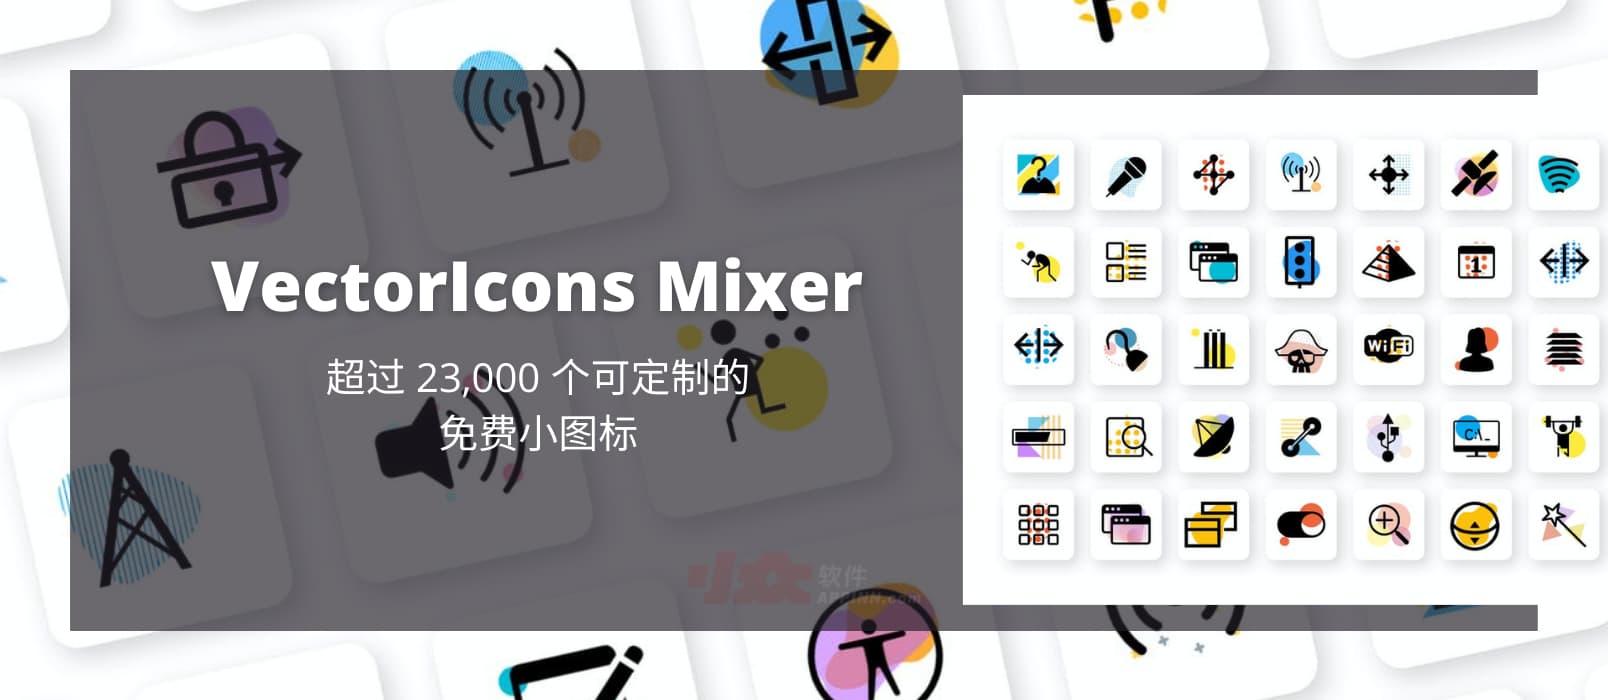 VectorIcons Mixer -  超过 23,000 个可定制的图标